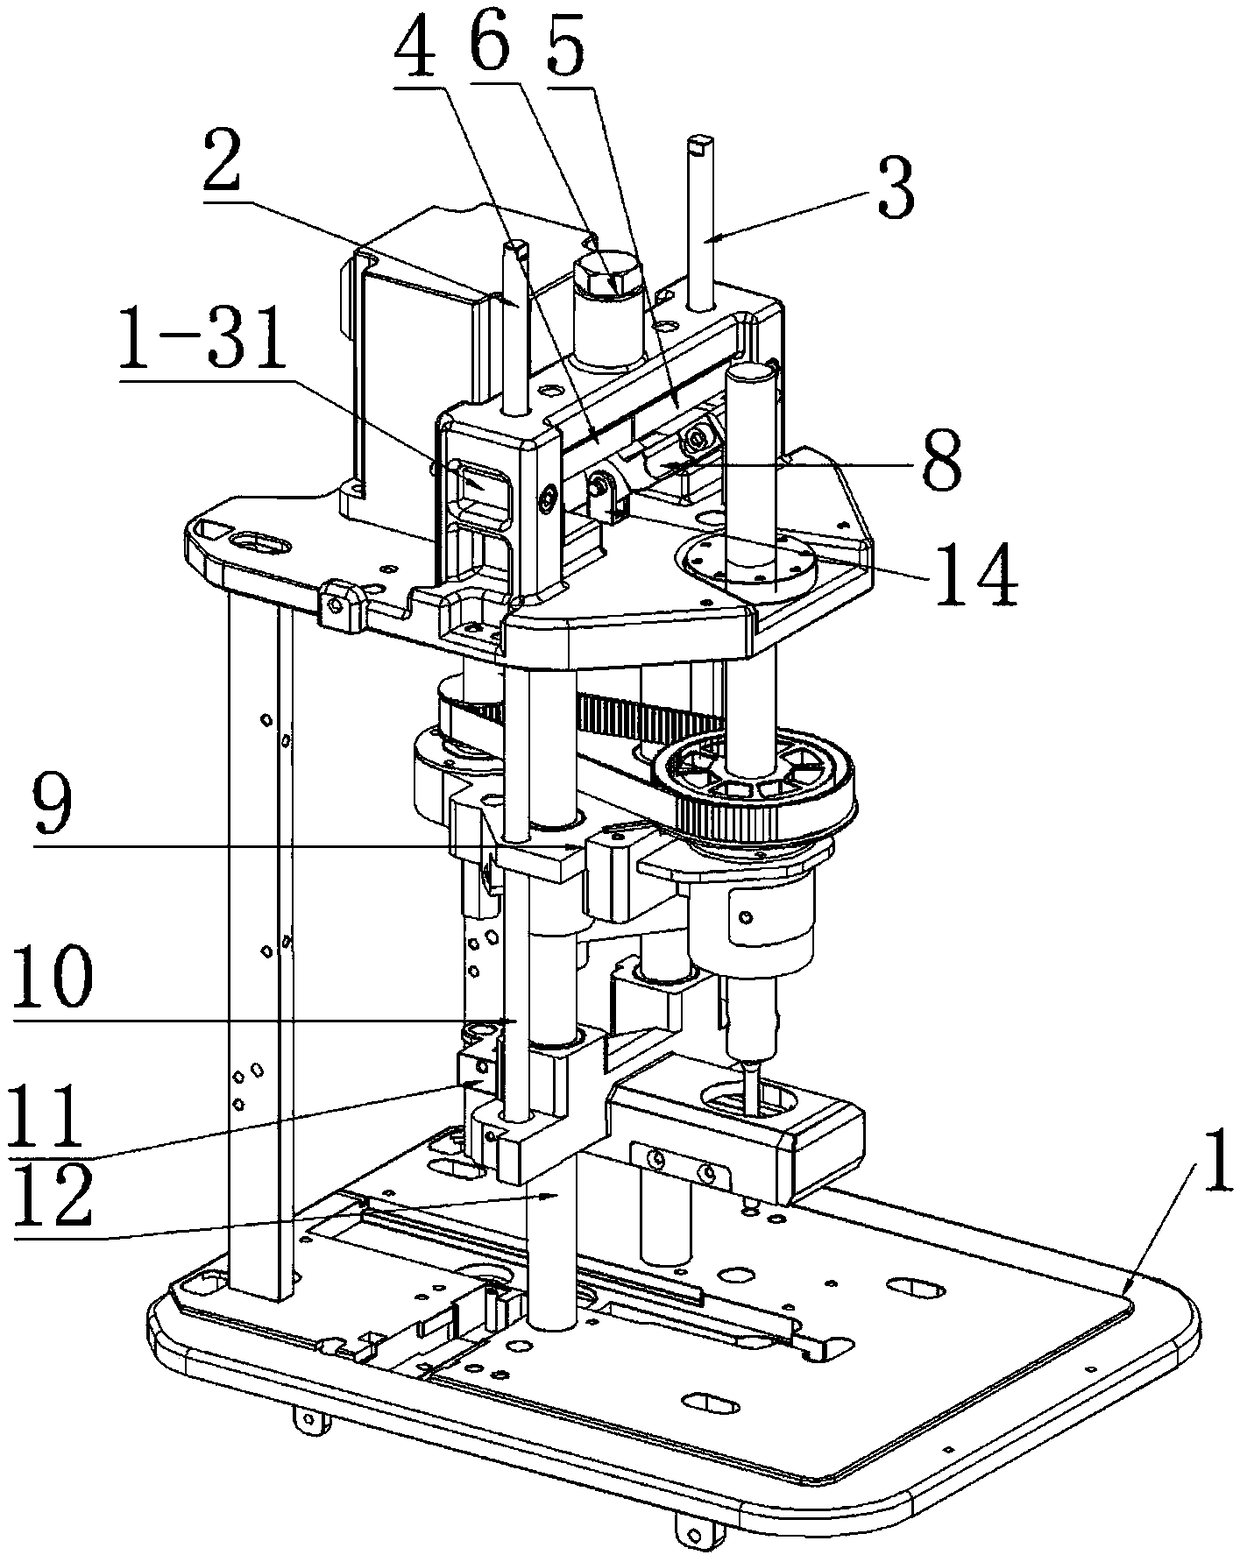 Paper pressing table locking mechanism of binding machine